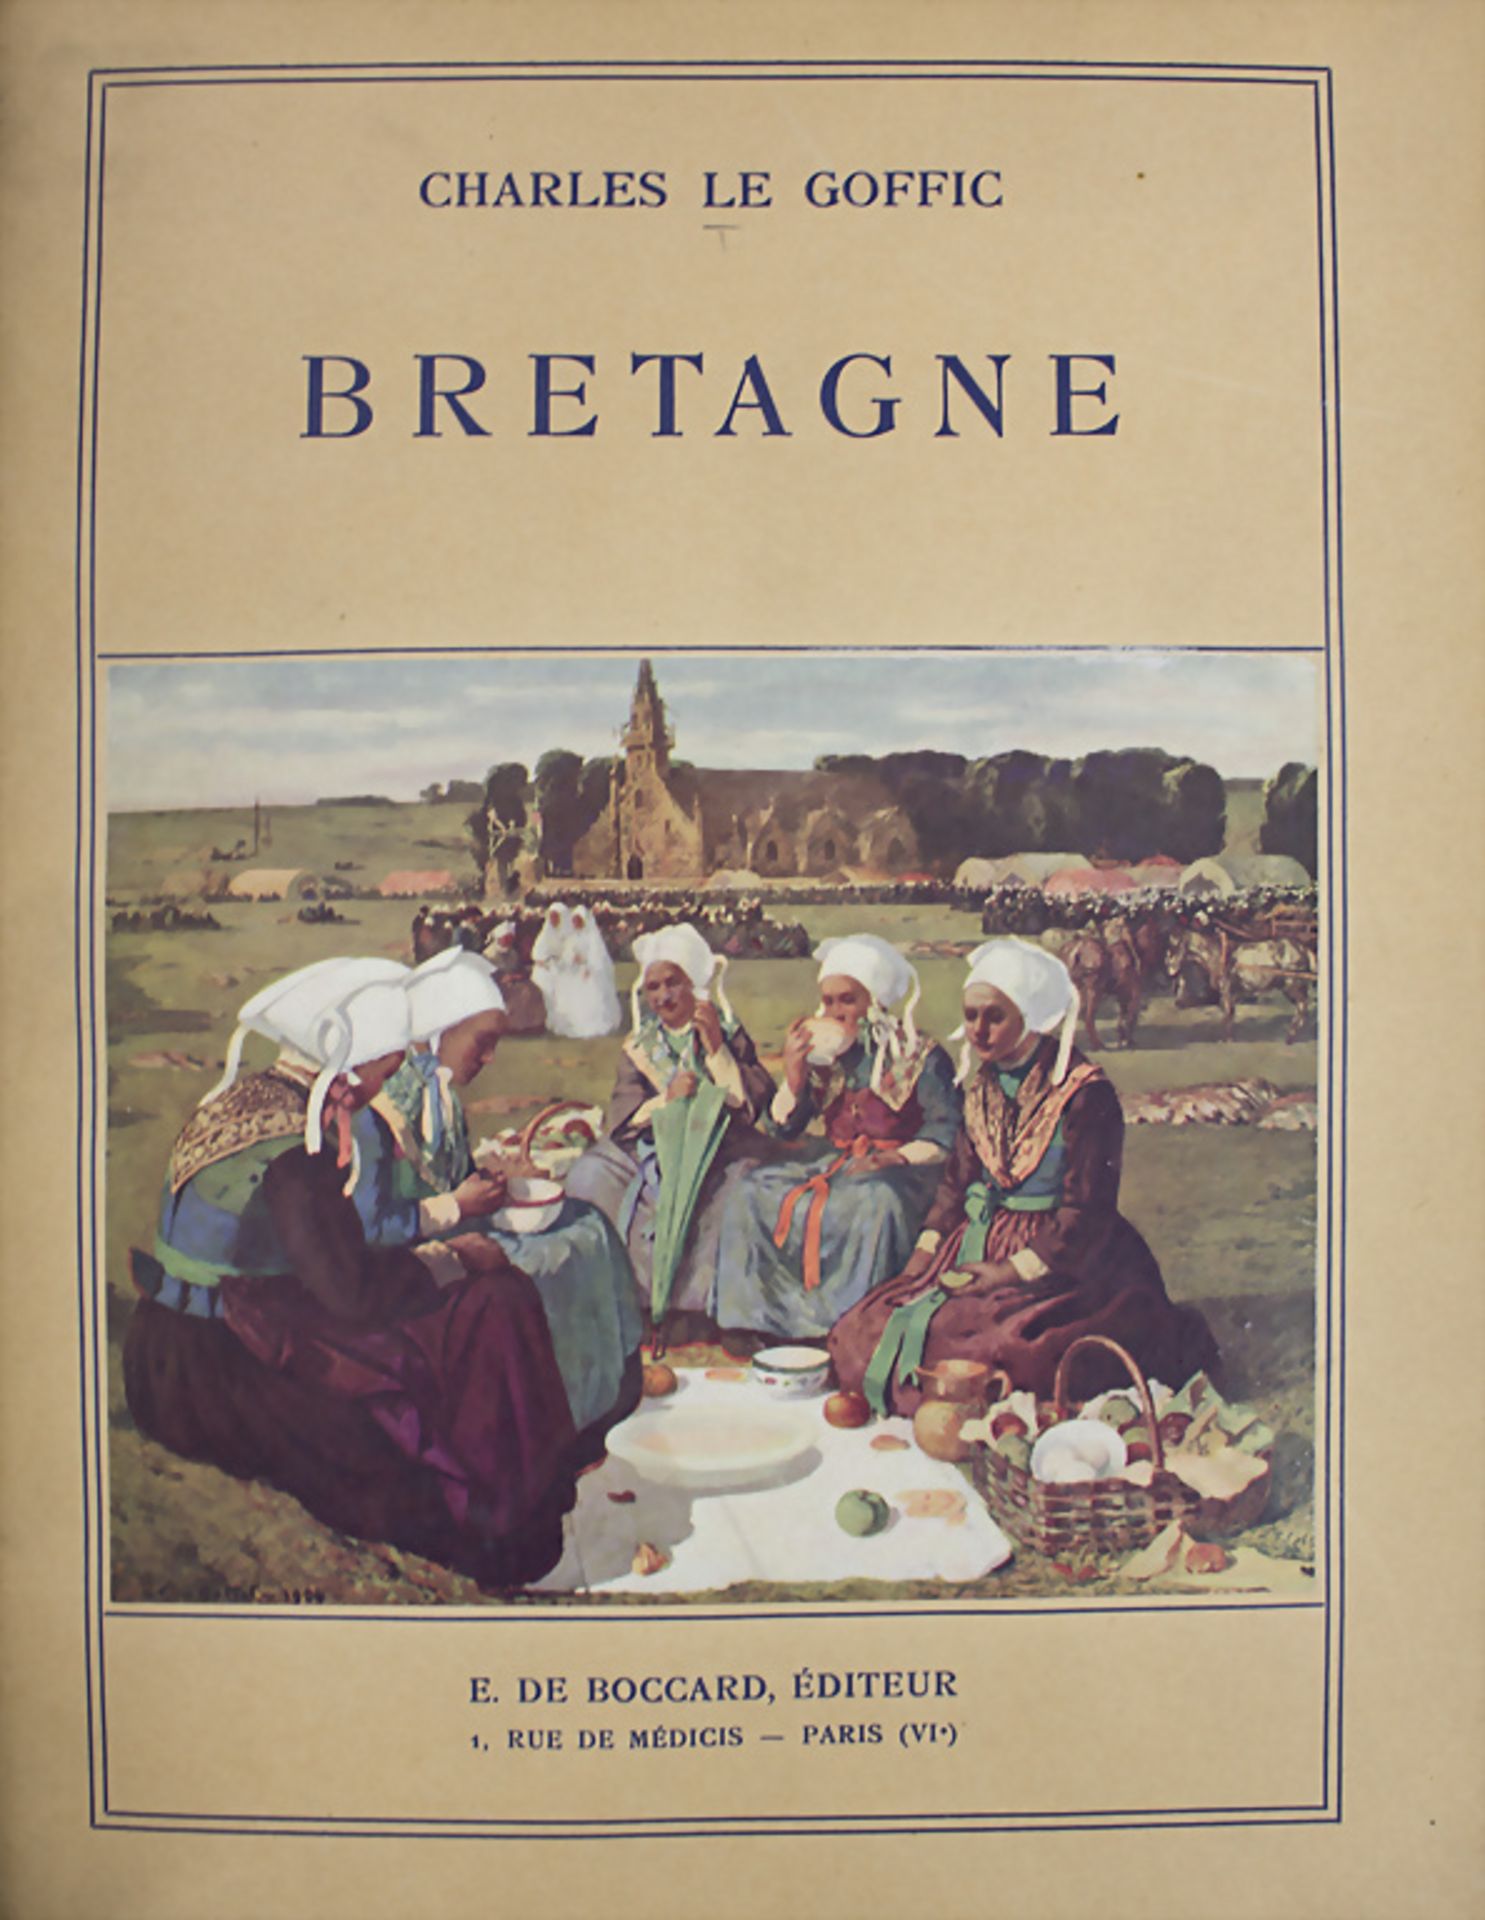 Charles Le Goffic, 'Bretagne' / 'Brittany', Paris, 1921